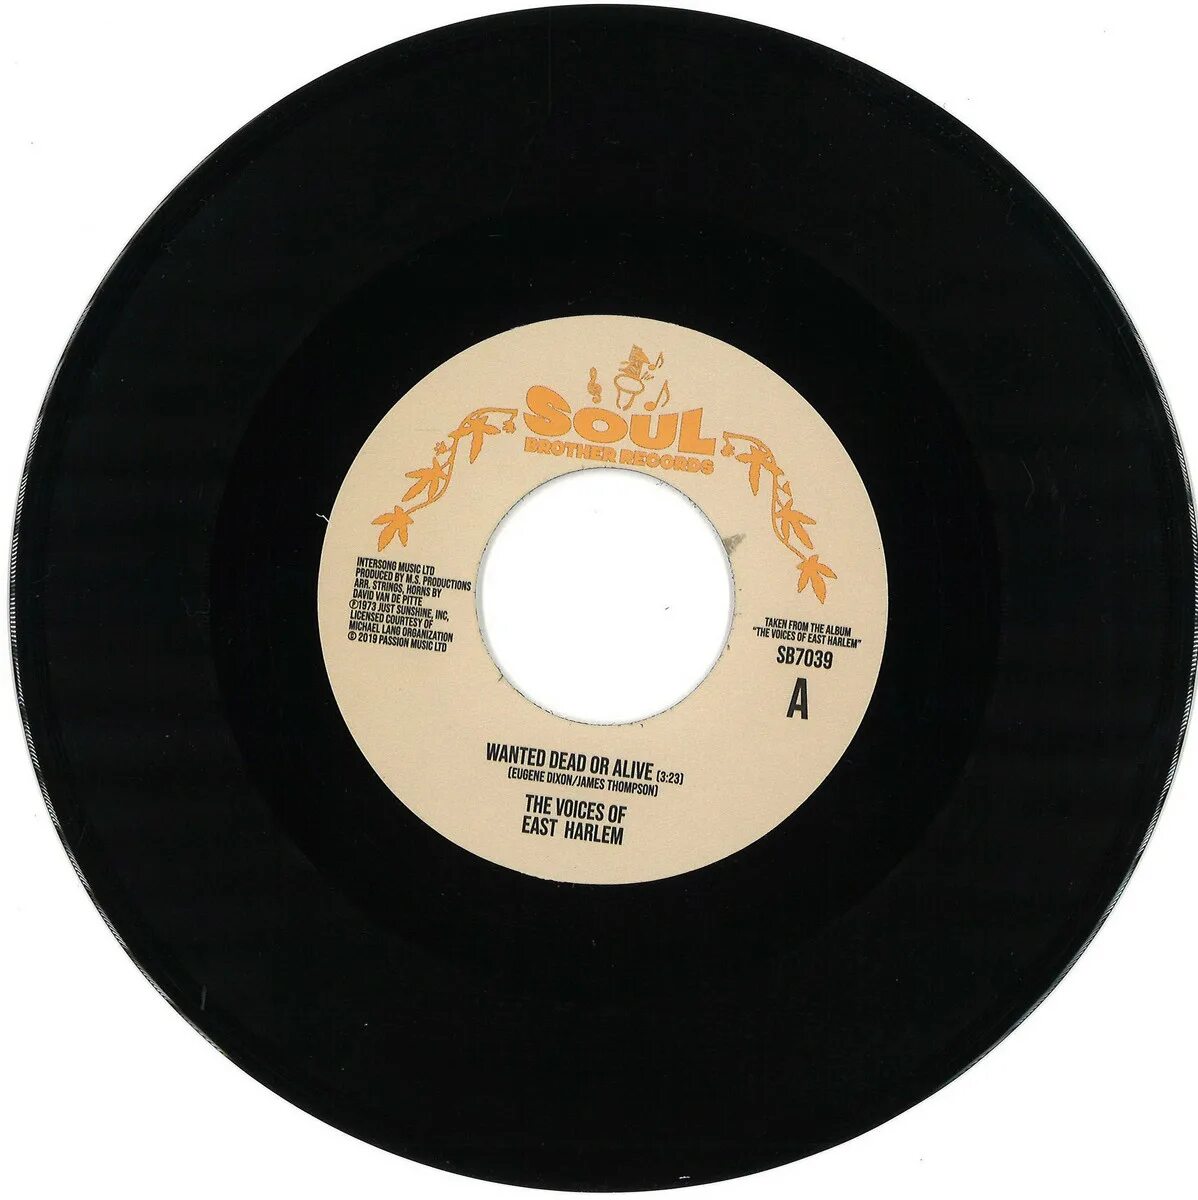 Brother records. Incredible Bongo Band пластинки. Keni Burke - 1977 - keni Burke (2022 Remaster). Used records-used records 1984 фото. Keni Burke changes.